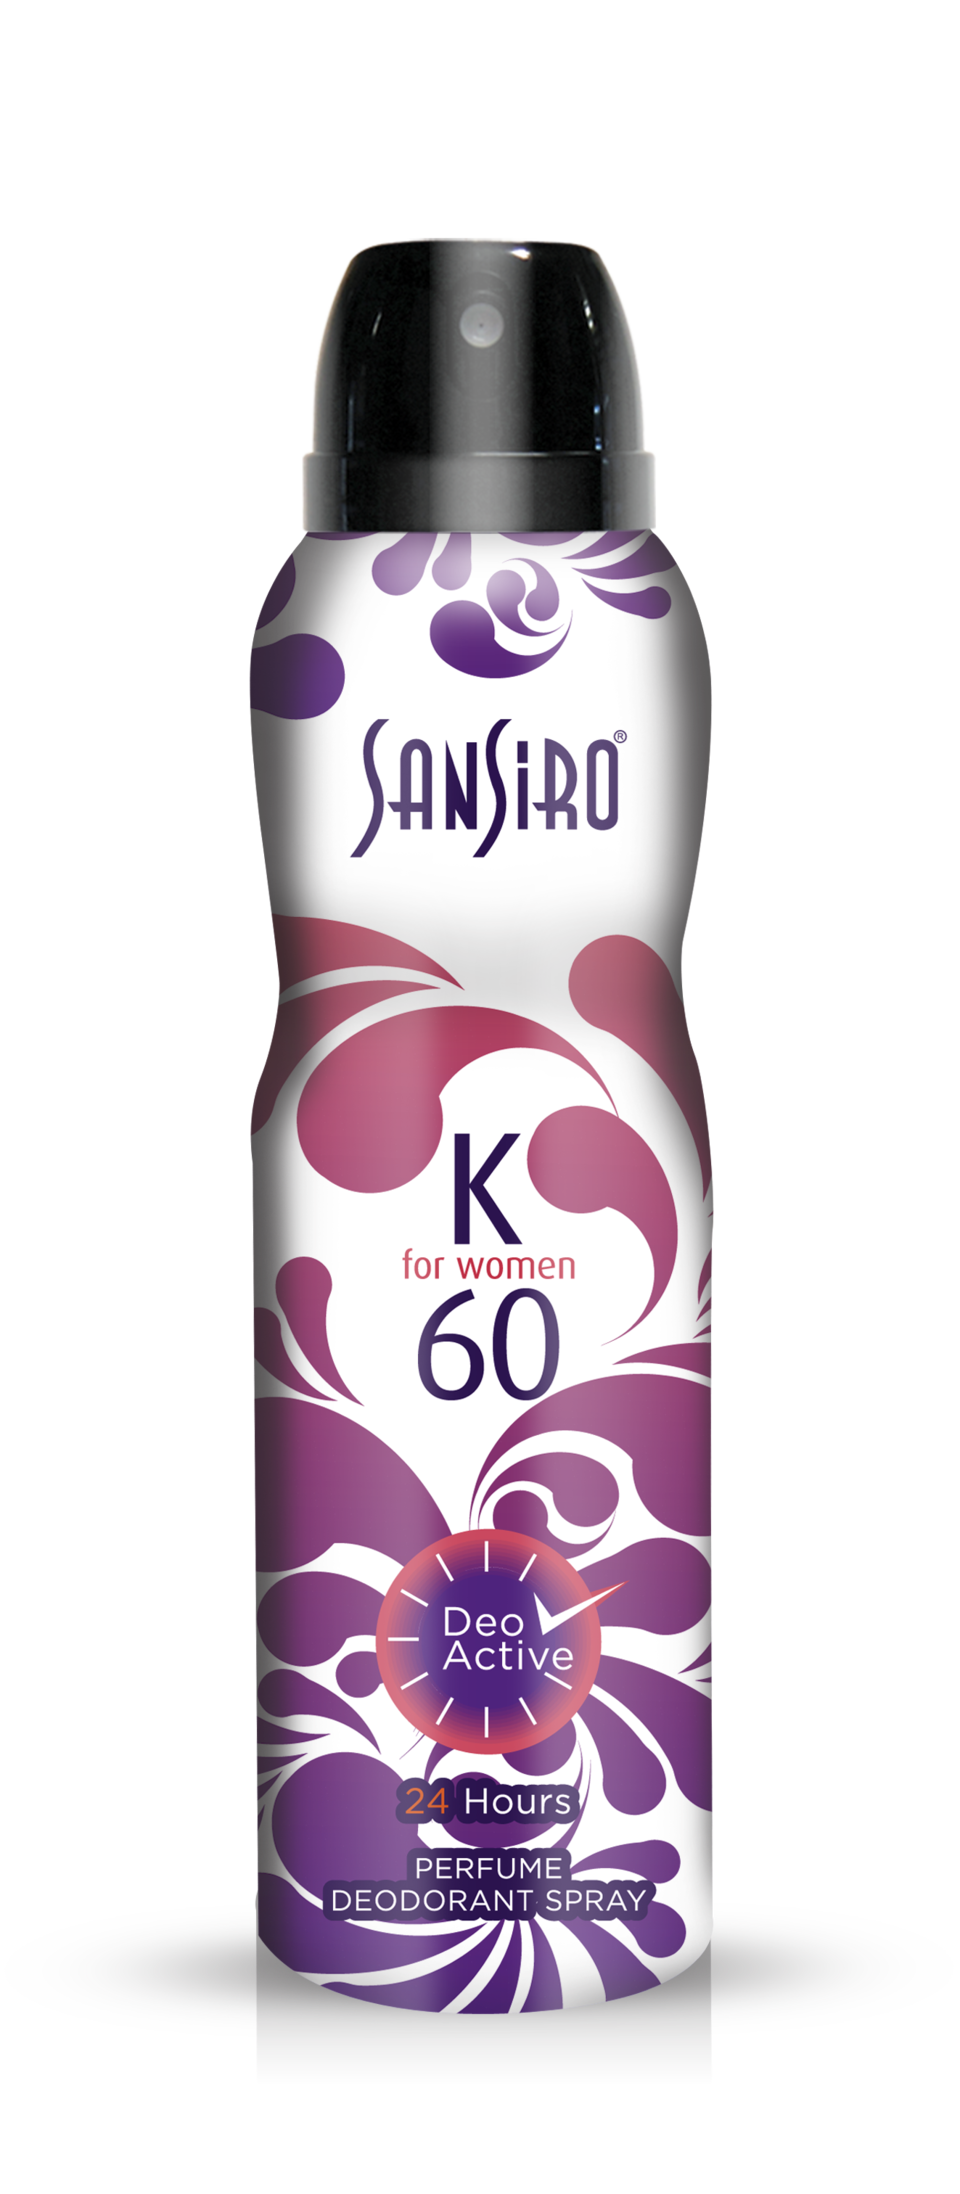 Sansiro Perfume - Deo For Women - Deodorant K60